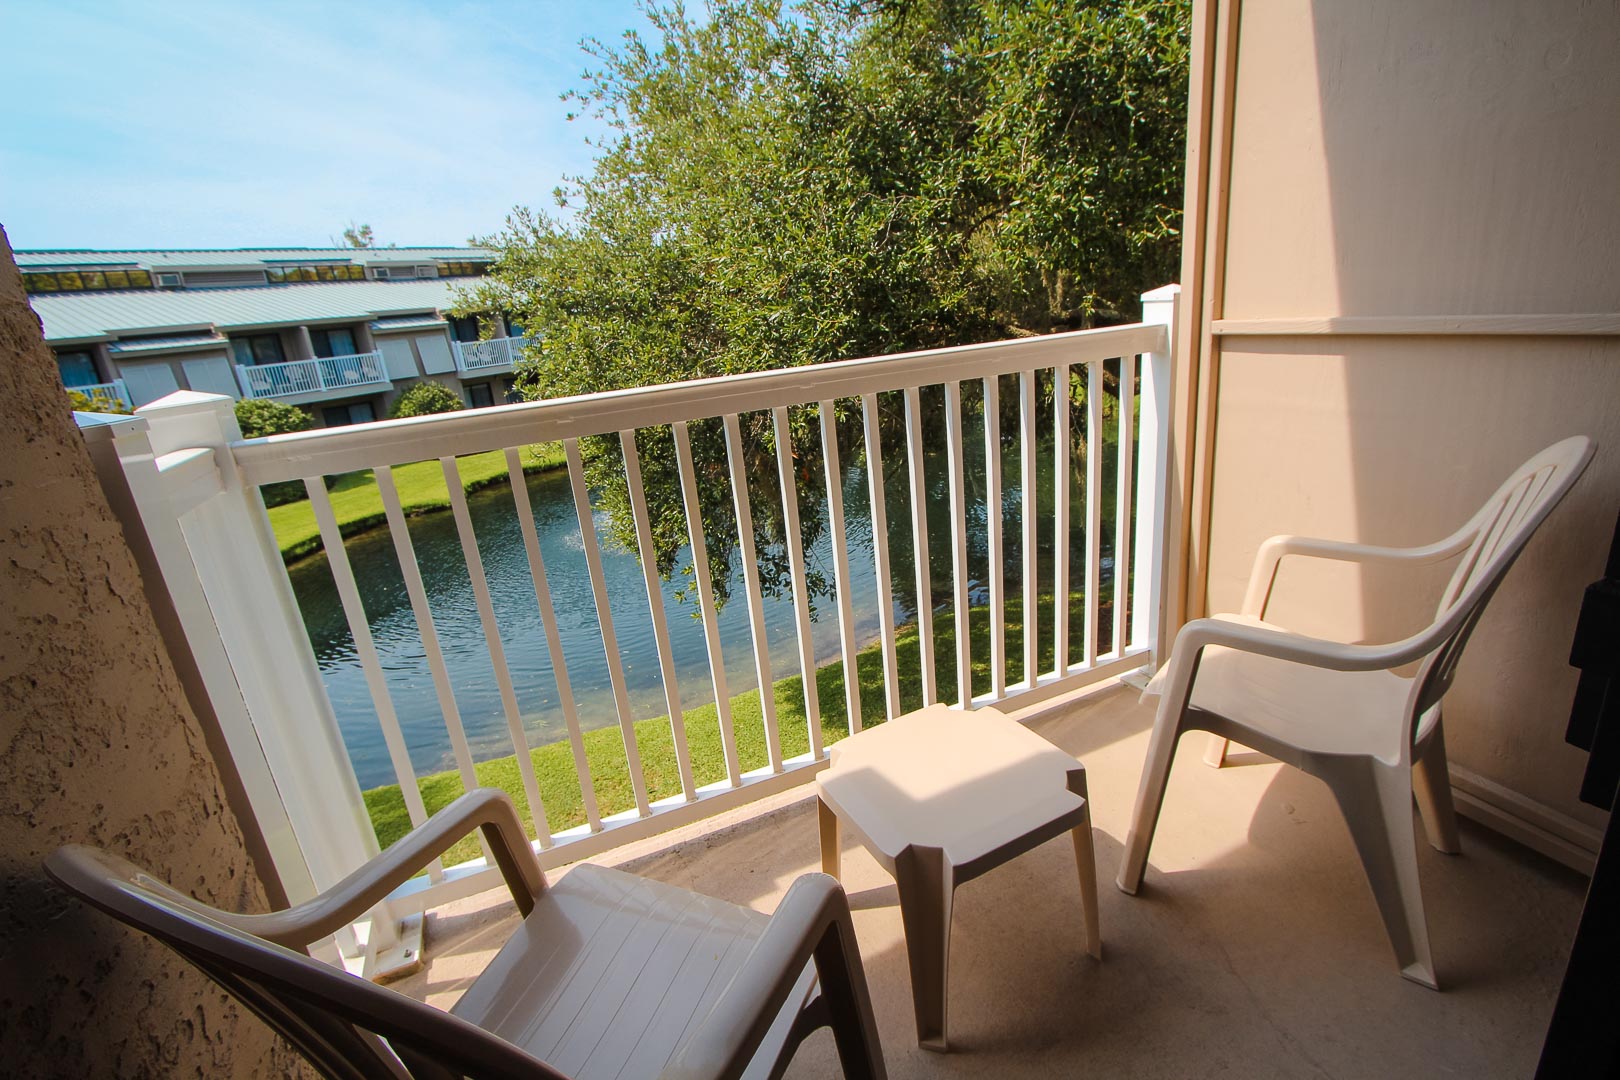 A peaceful balcony view at VRI's Players Club Resort in Hilton Head Island, South Carolina.